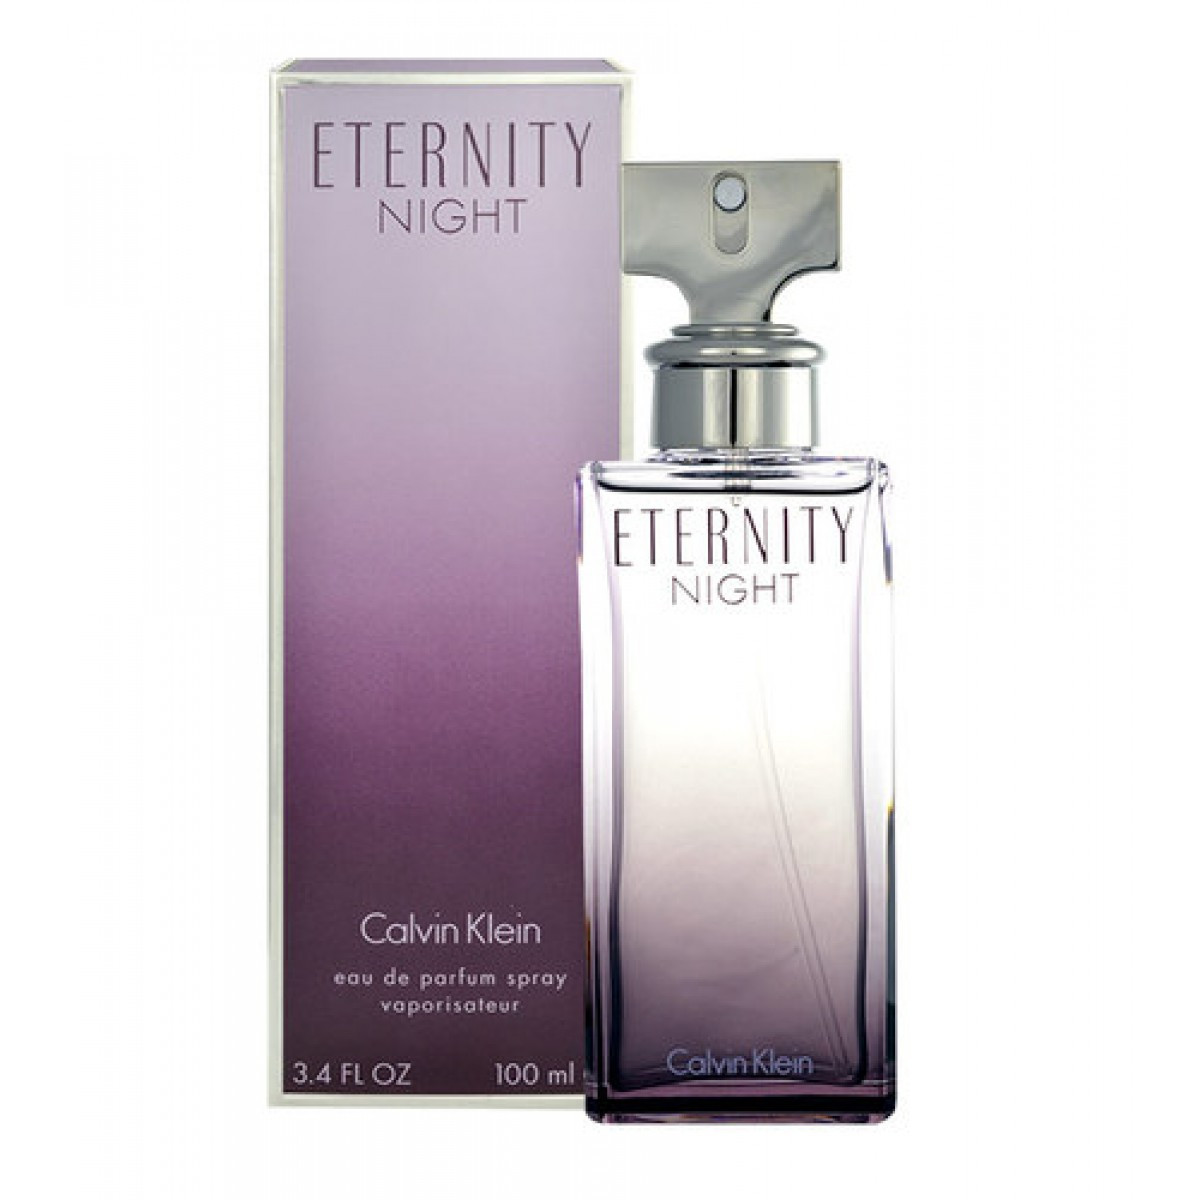 Calvin Klein "Eternity Night" 100 ml